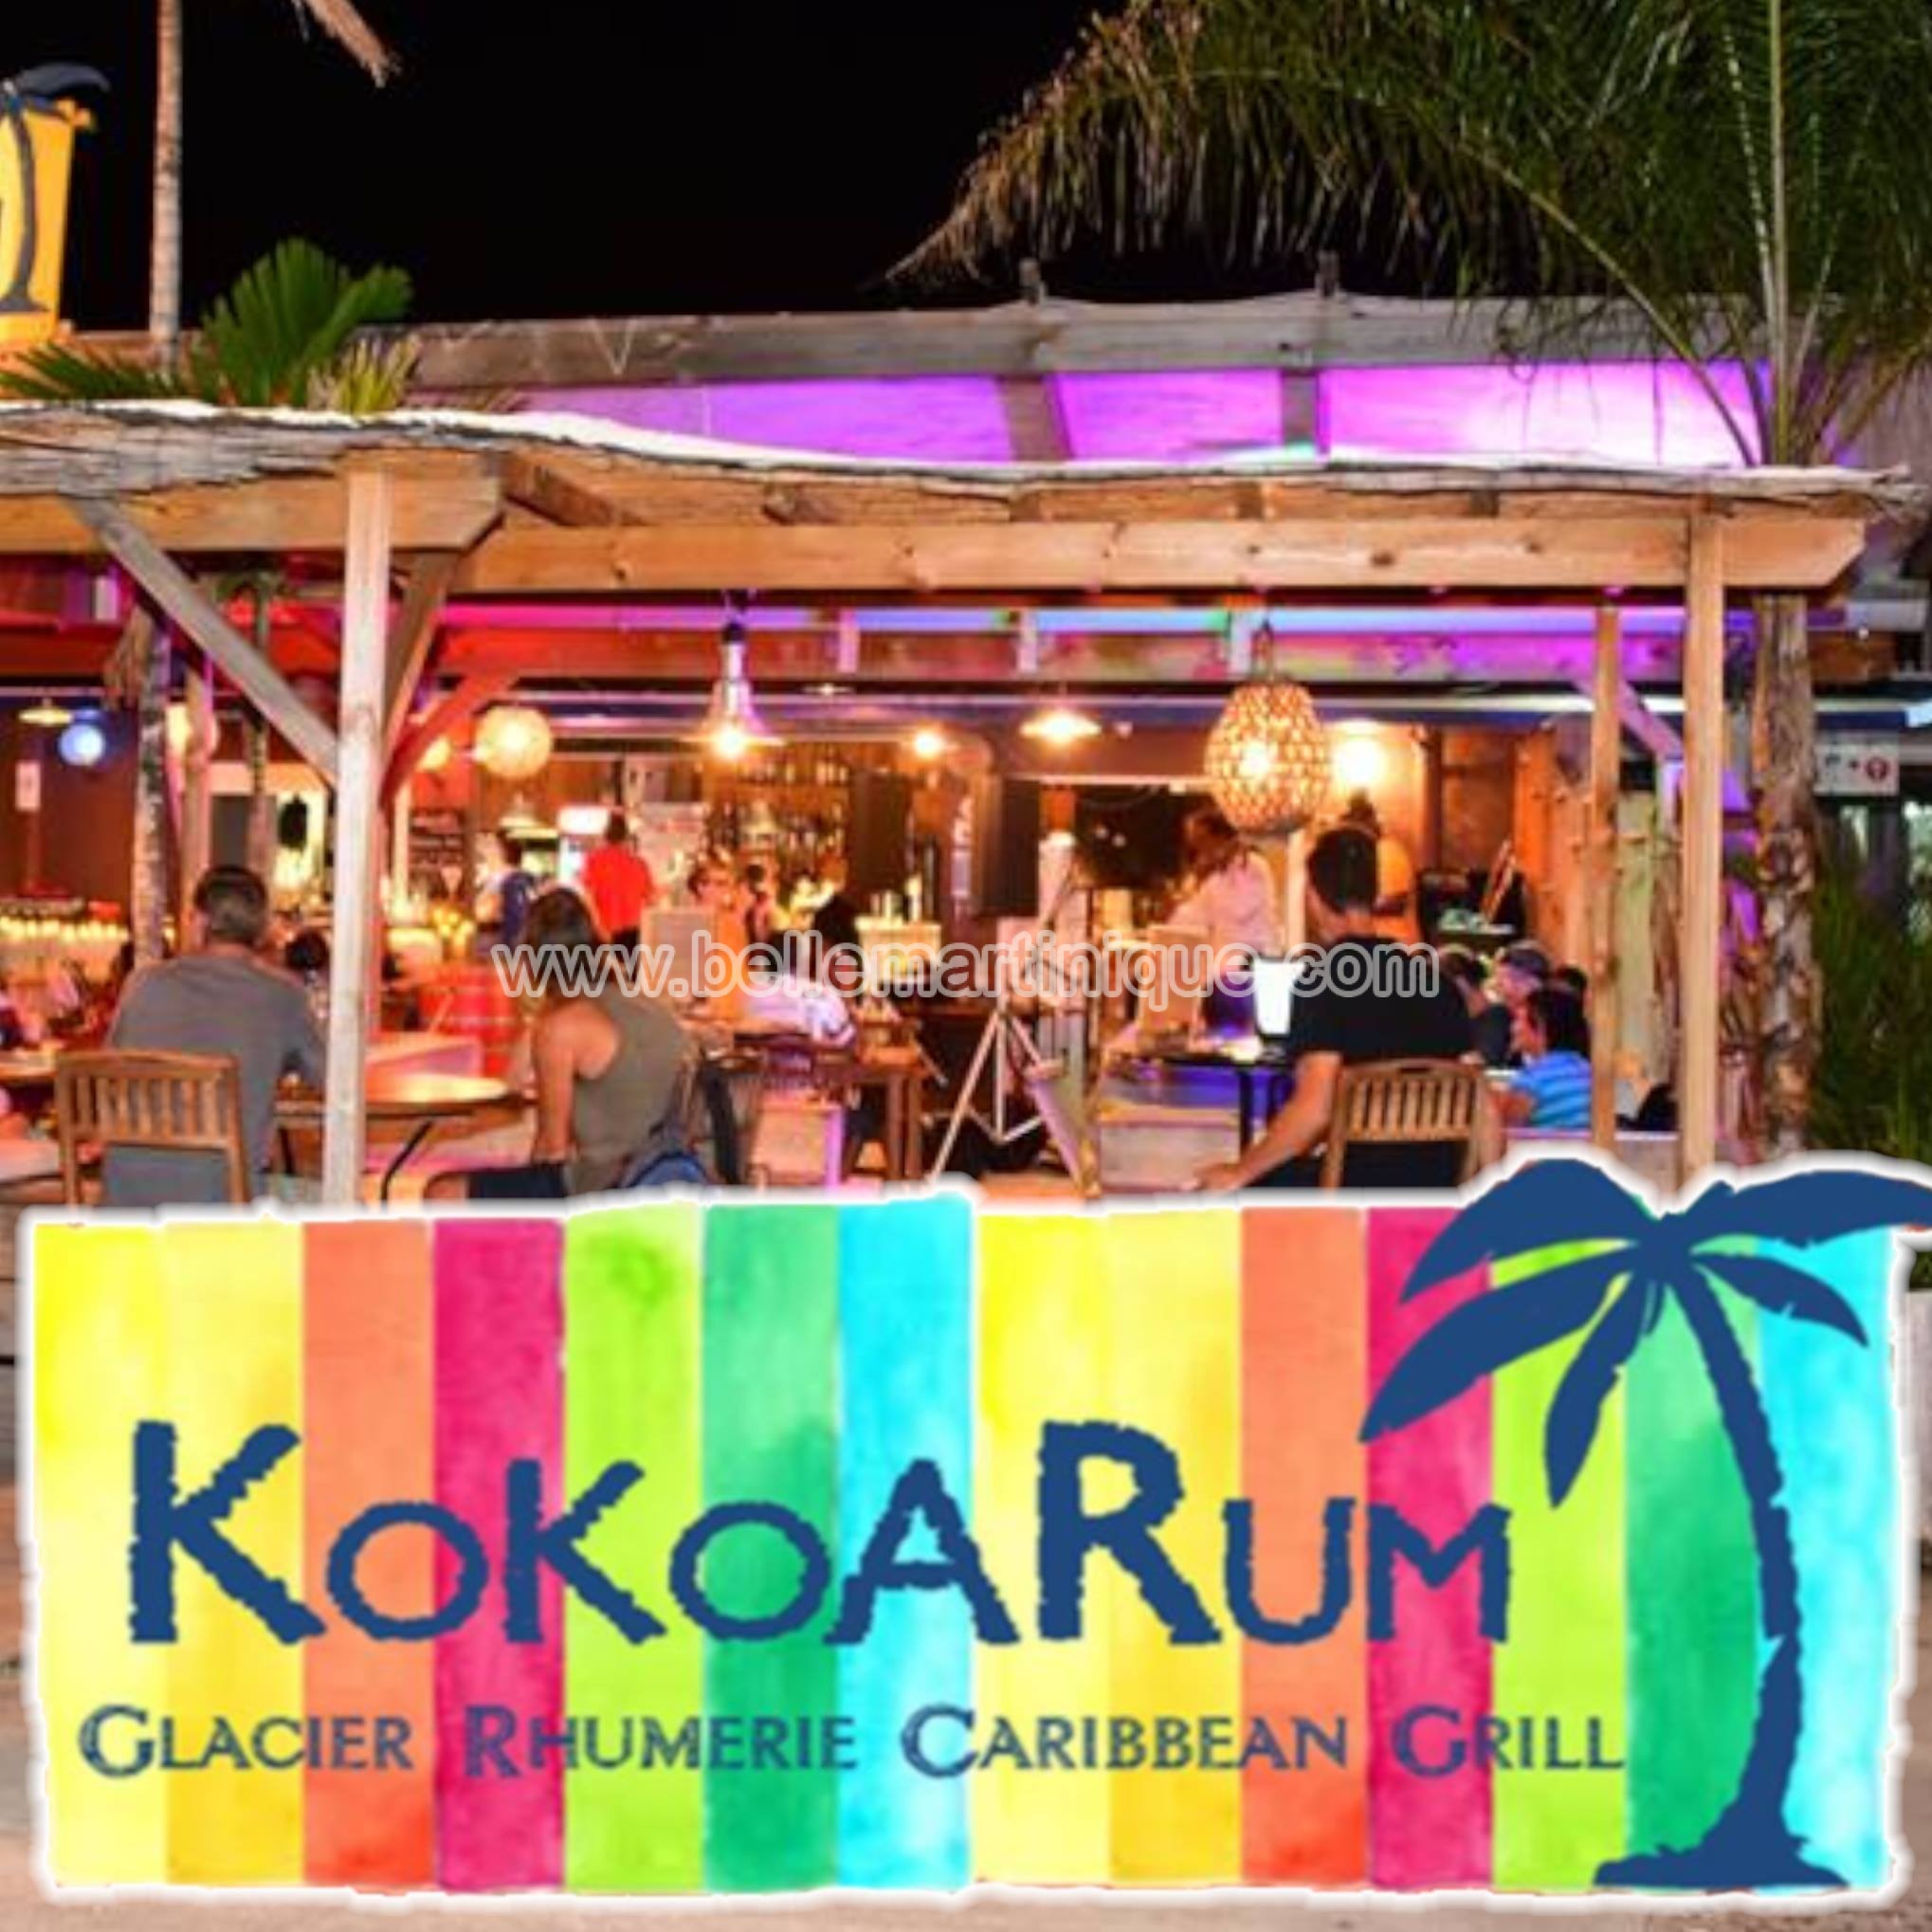 kokoarum-restaurant-rhumerie-bar-glacier-concert-marina-le-marin-martinique